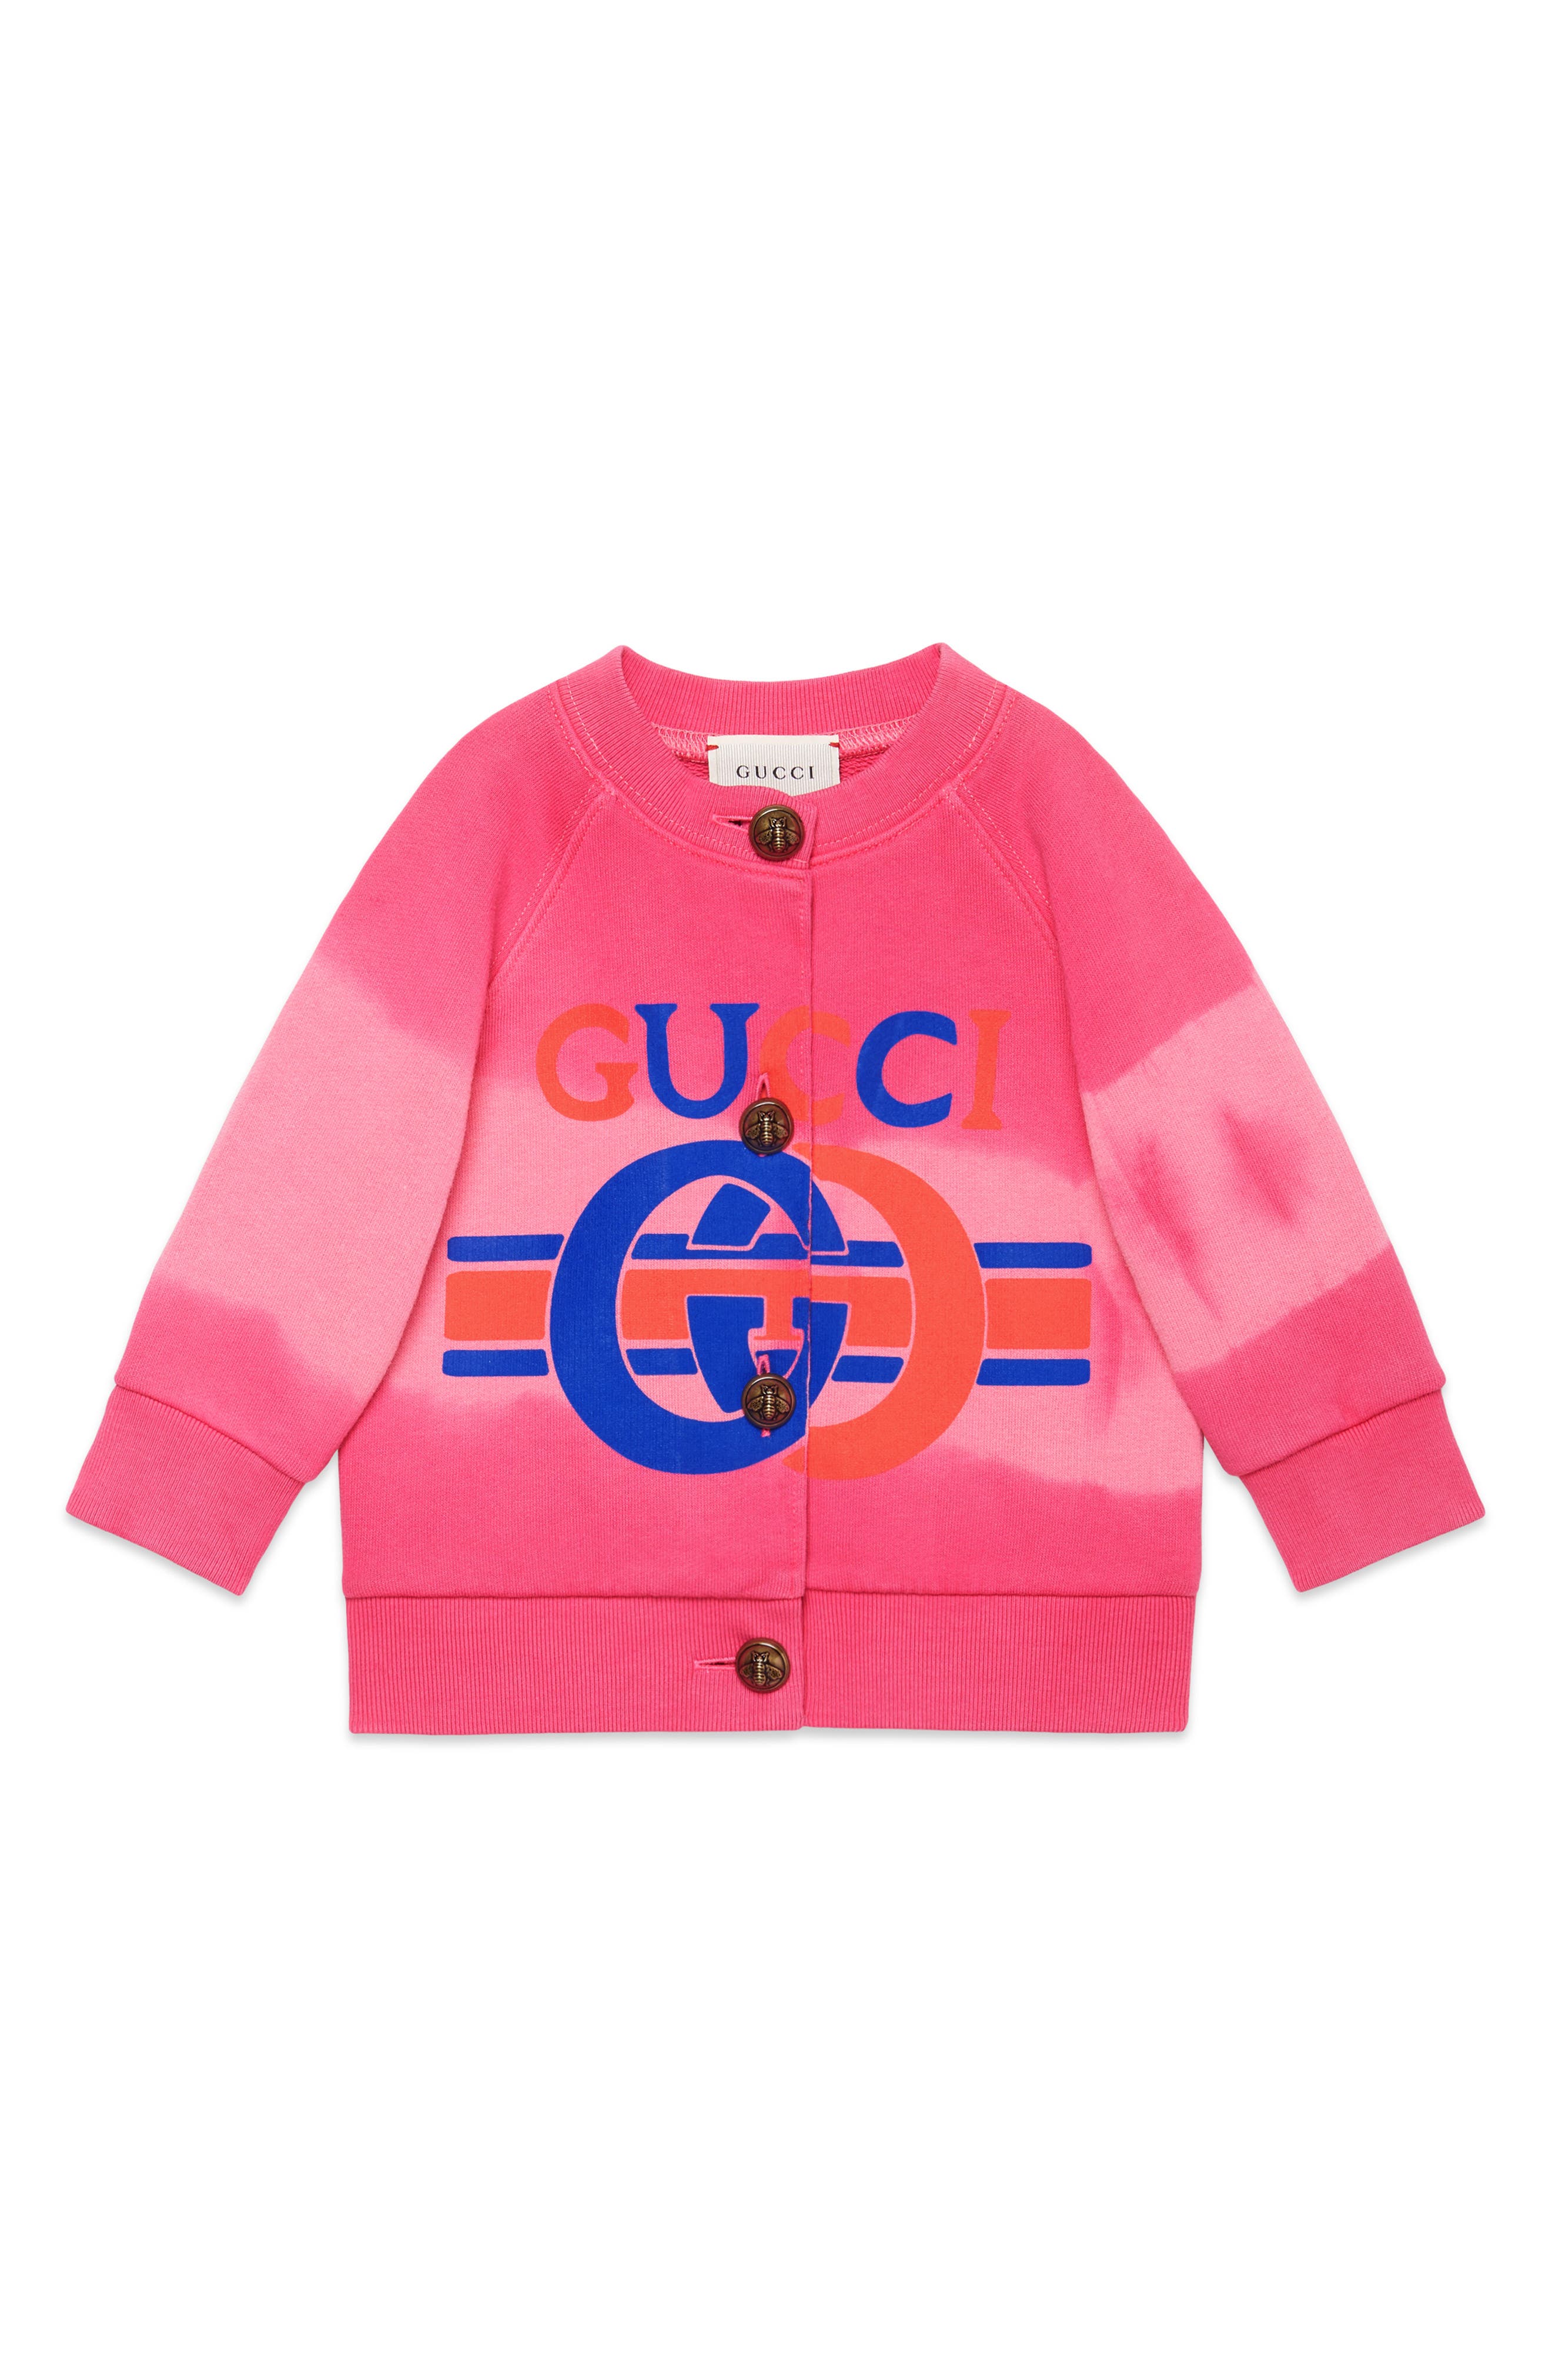 baby sweatshirt with gucci logo